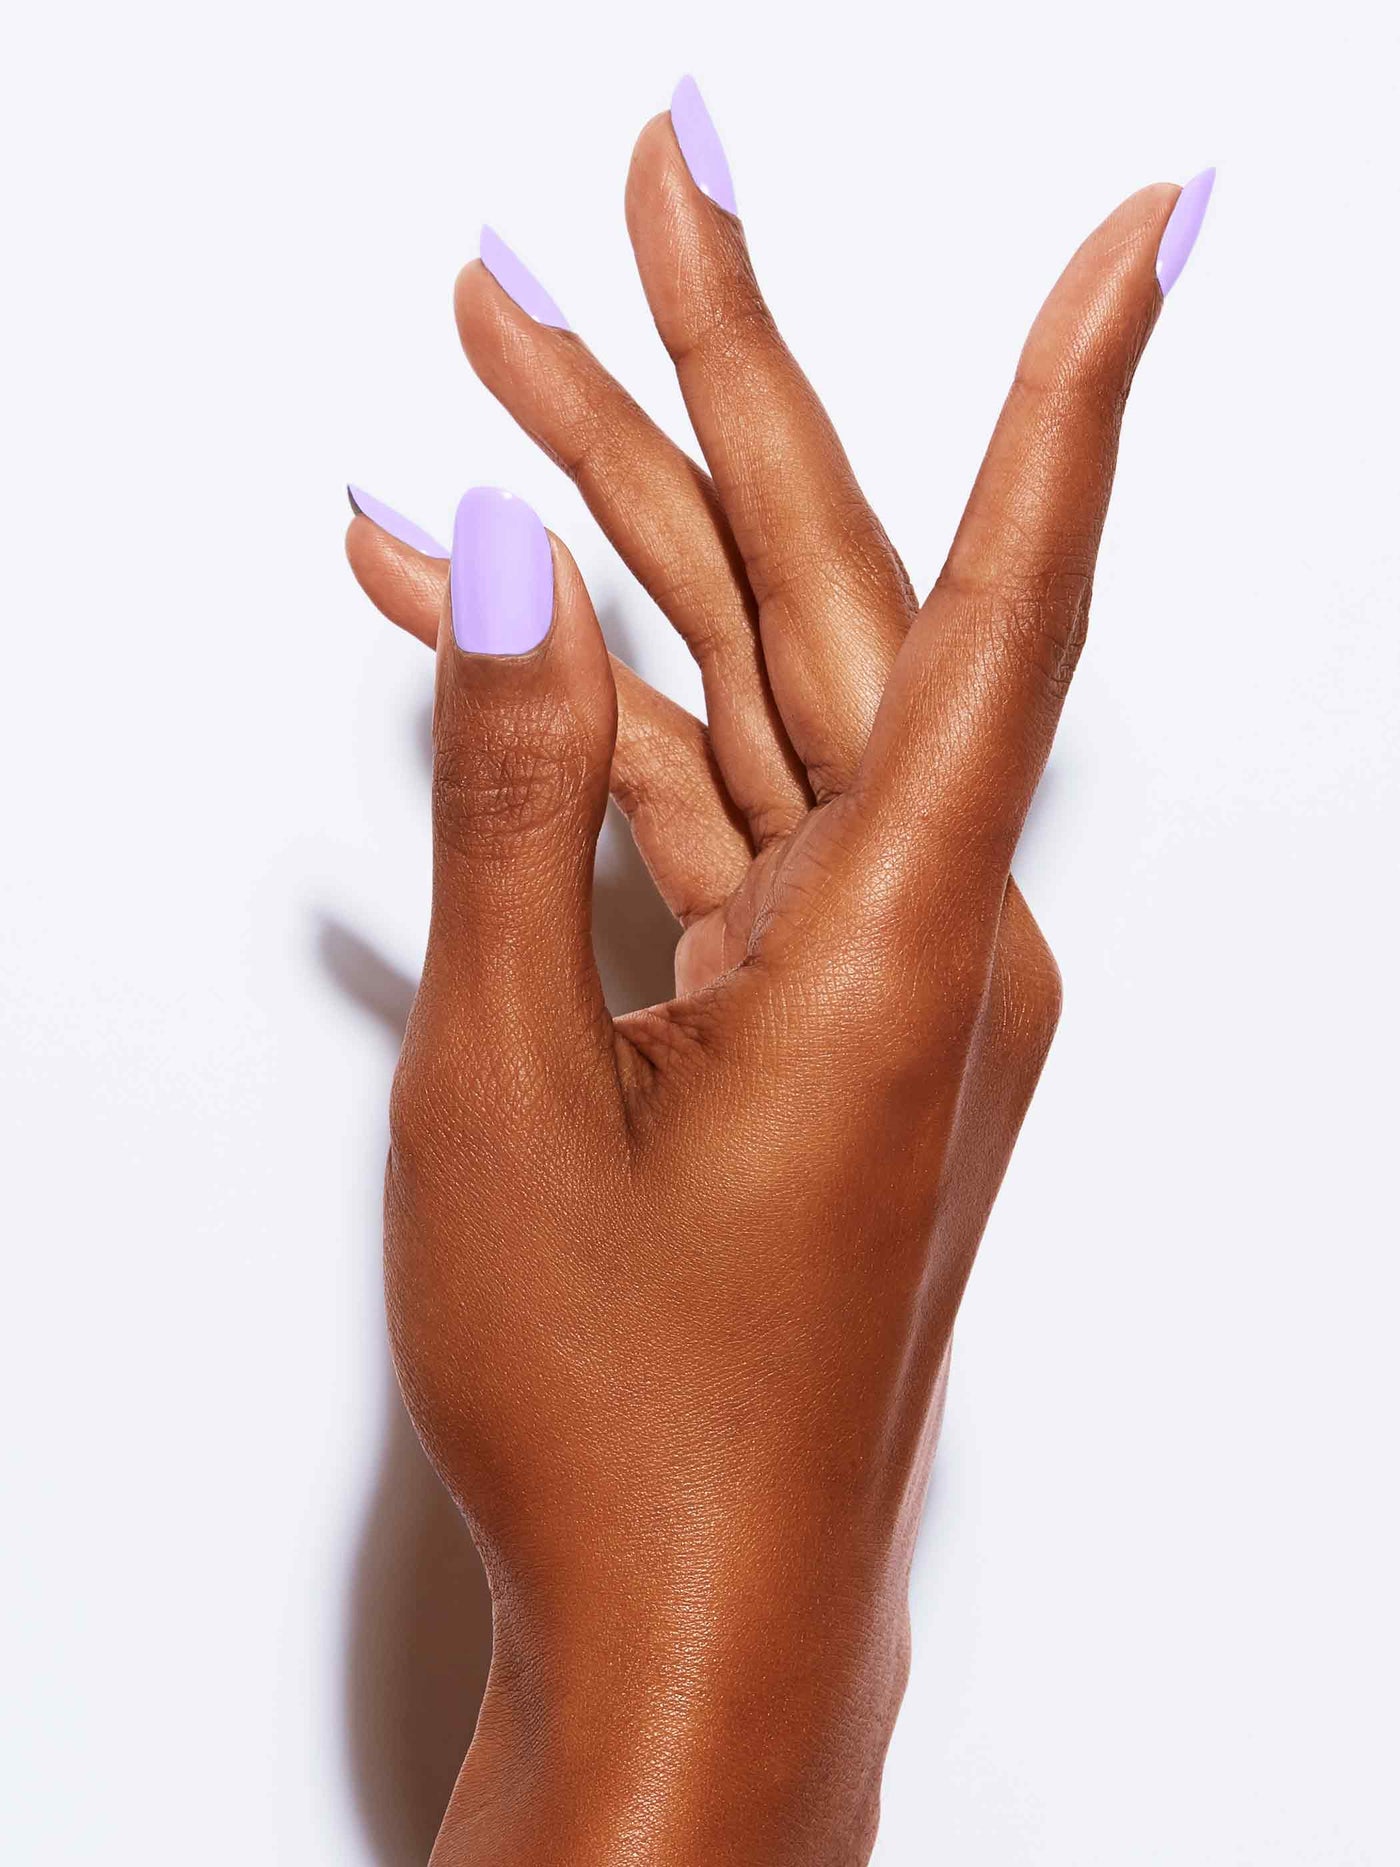 Neon pastel purple full-coverage nail polish, Rich